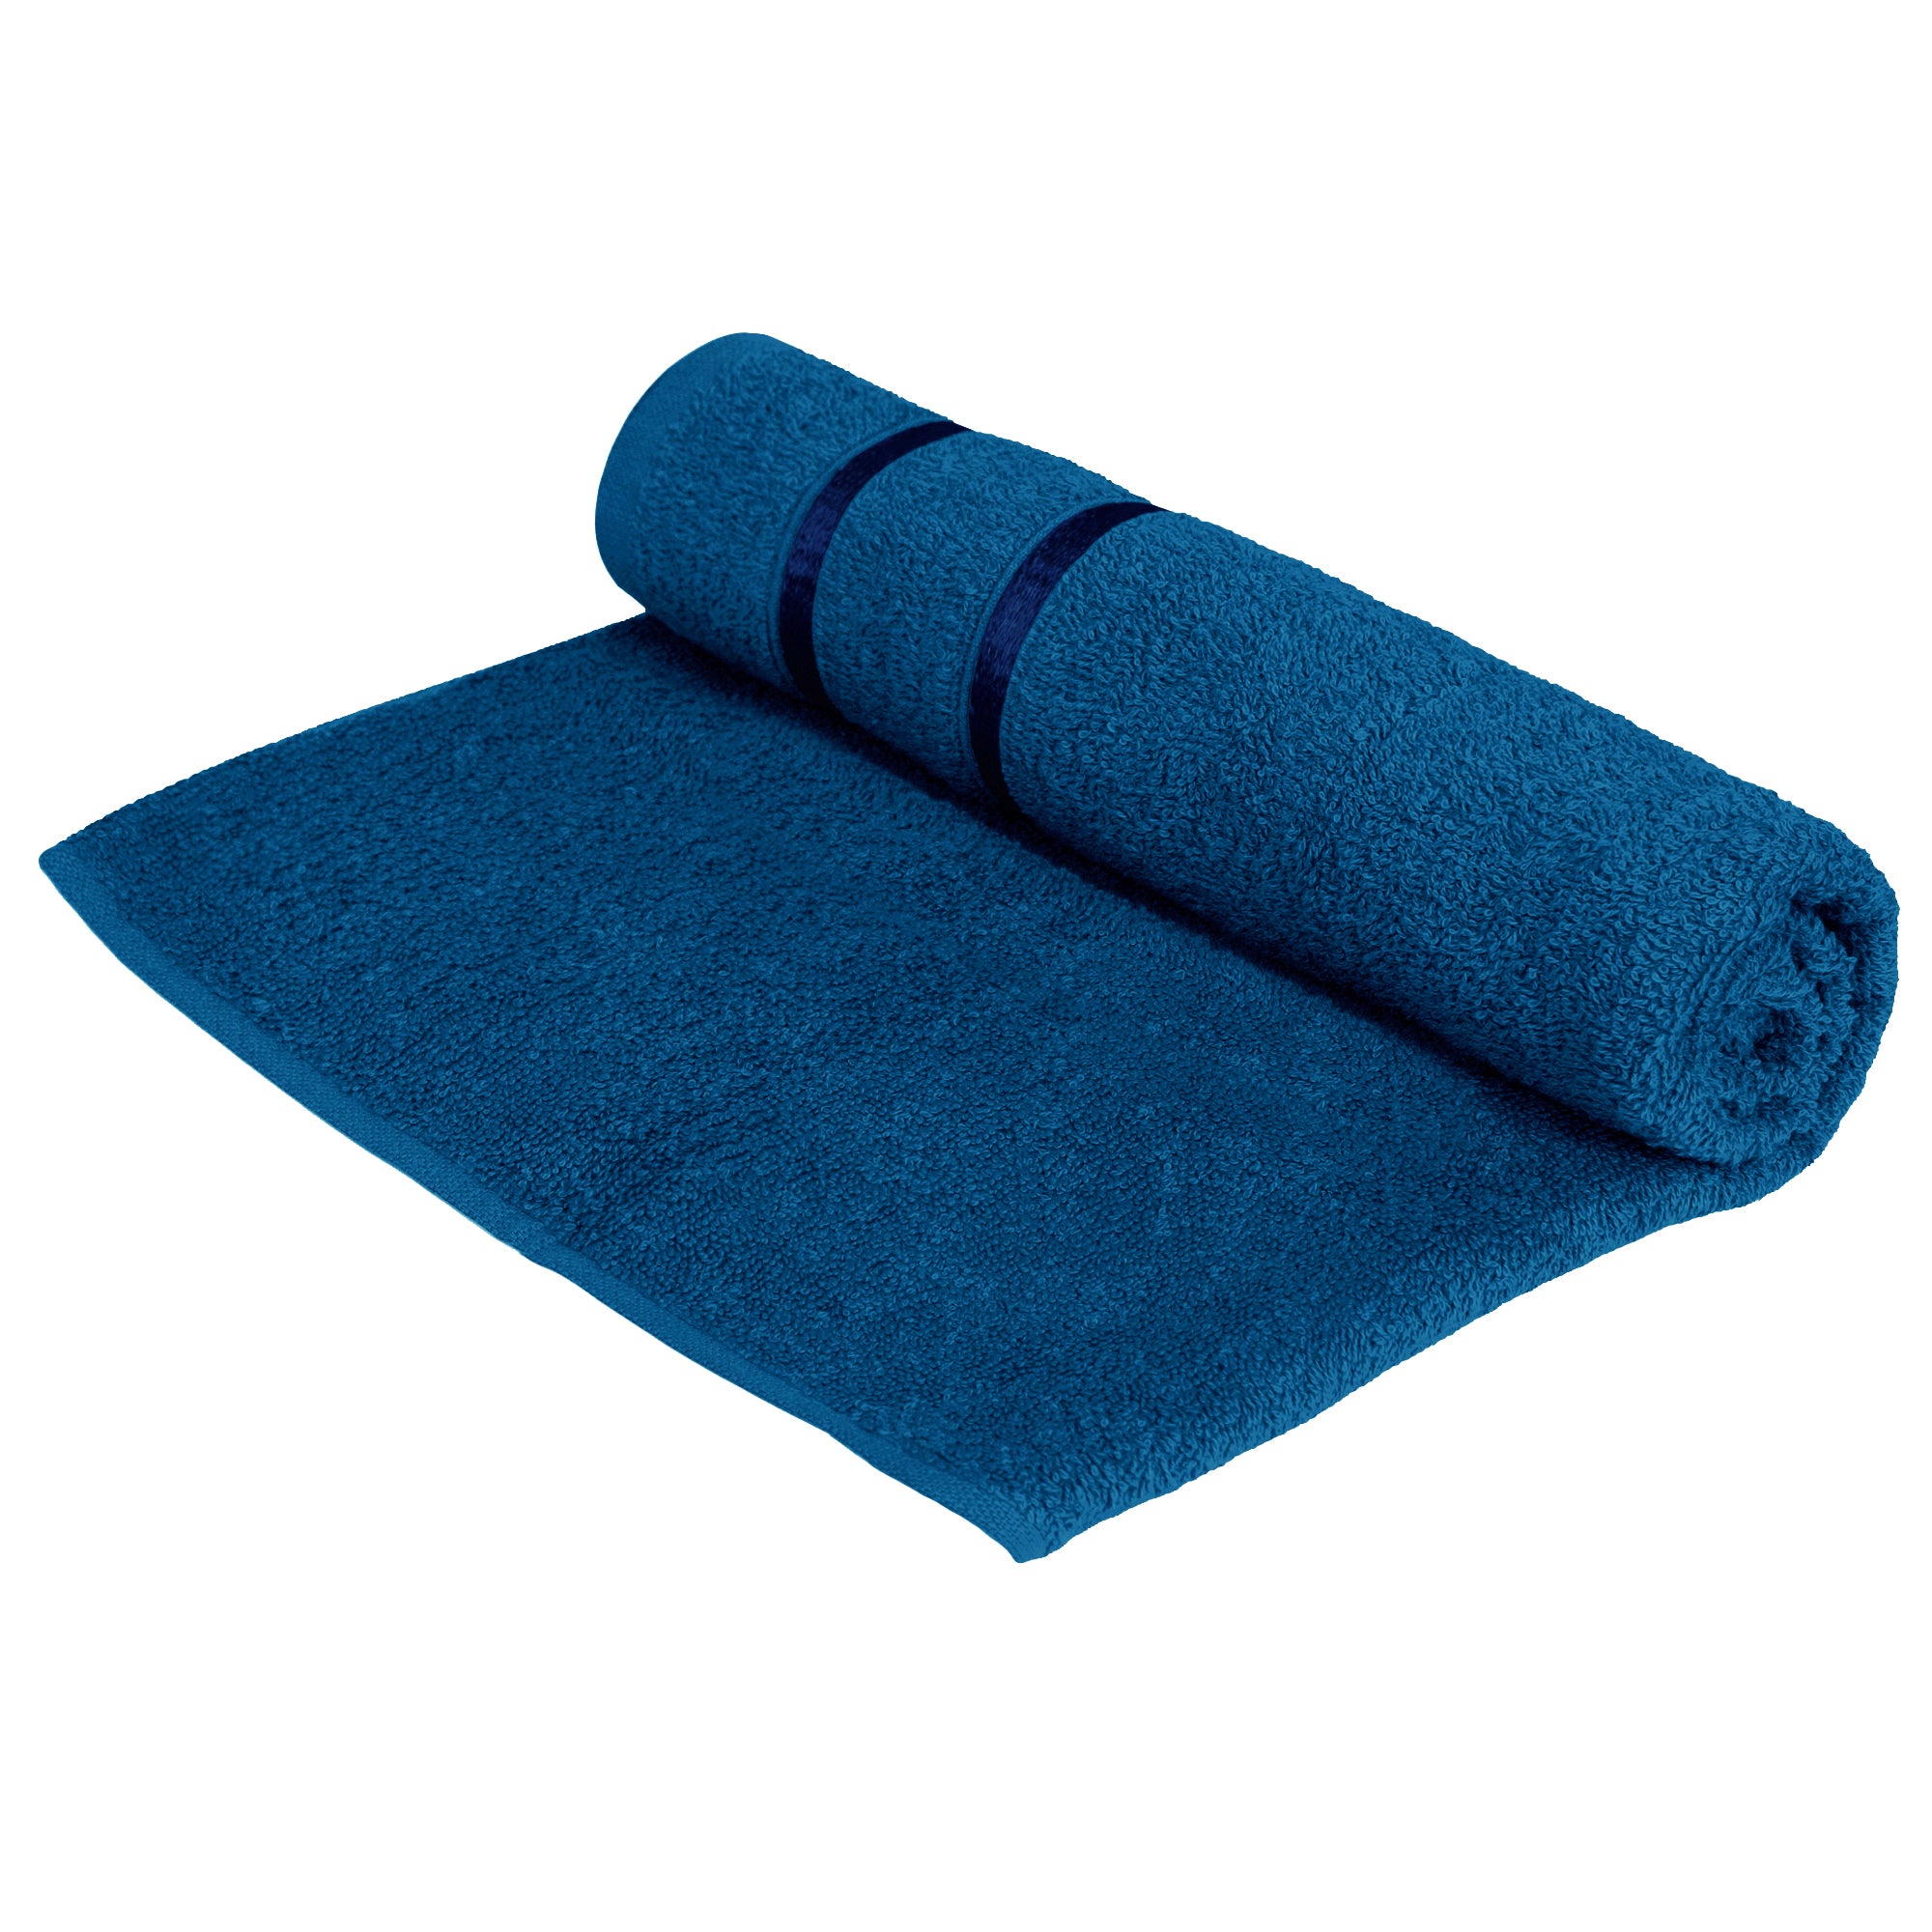 Story@Home 4 Units 100% Cotton Bath Towel - Navy Blue